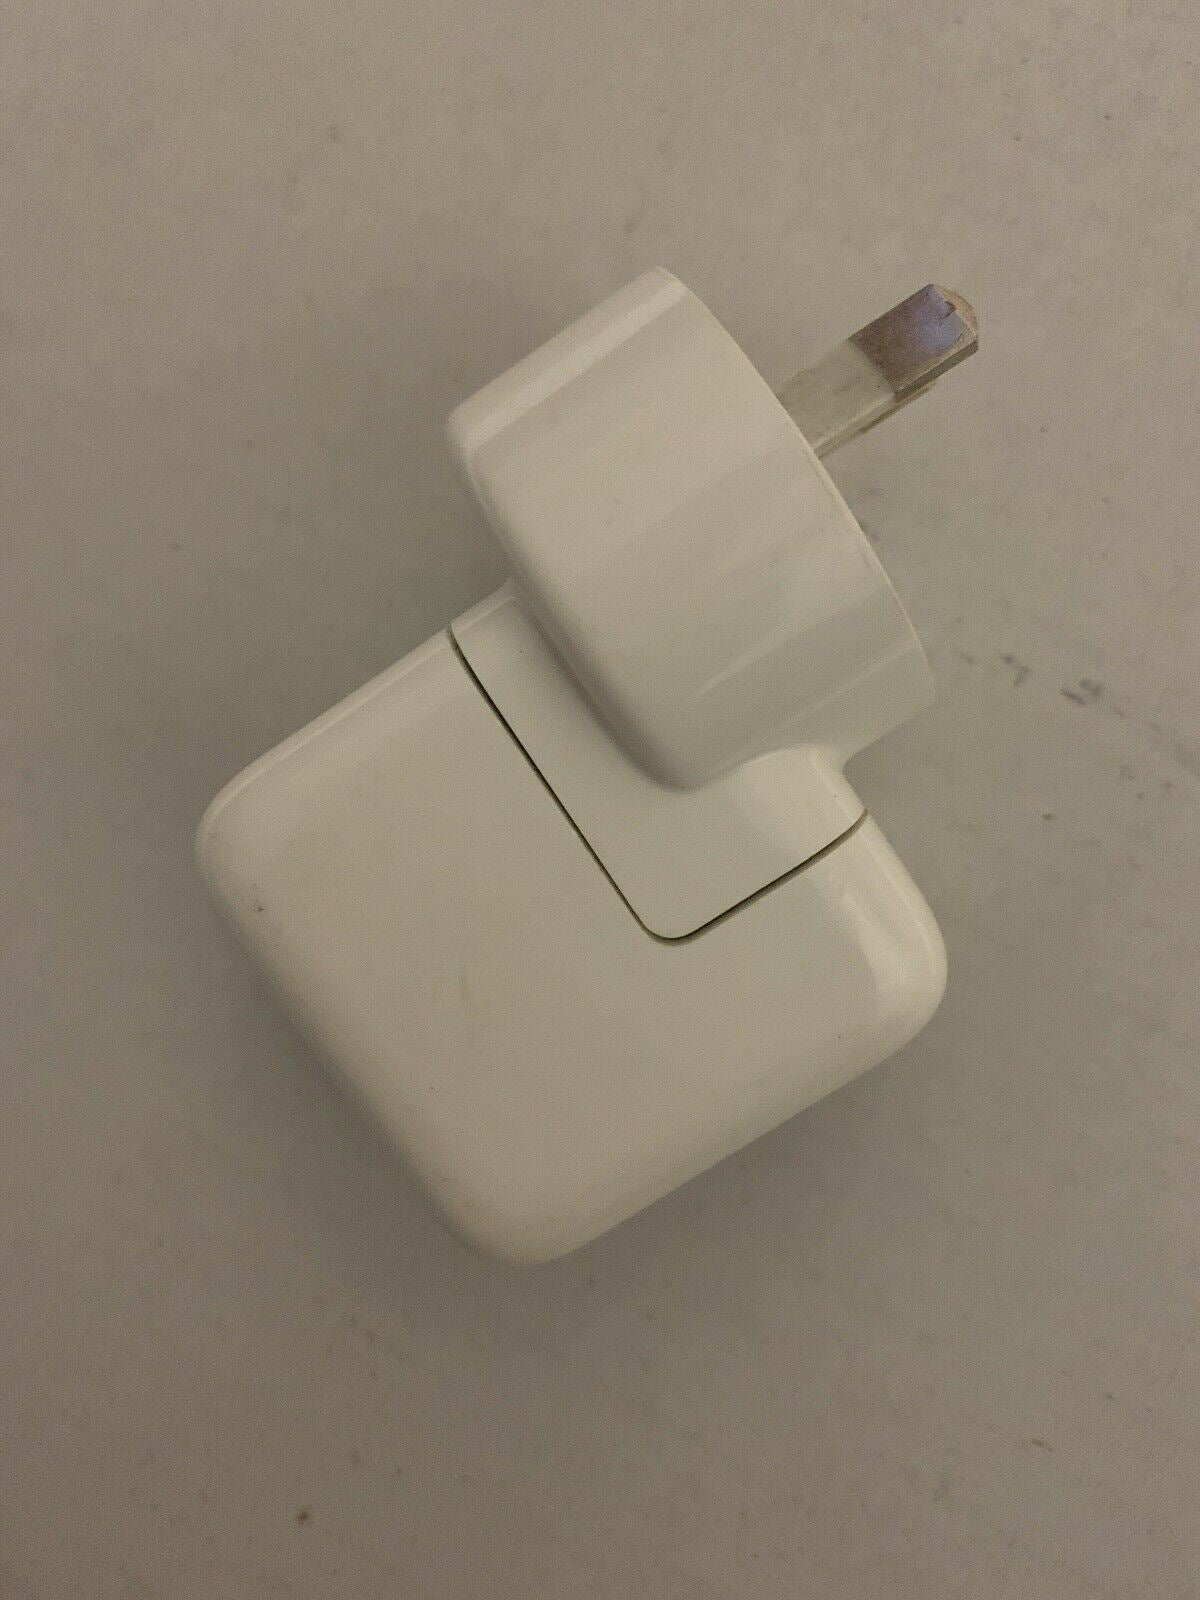 Apple A1205 iPod iPad iPhone USB Adapter 5V 1A